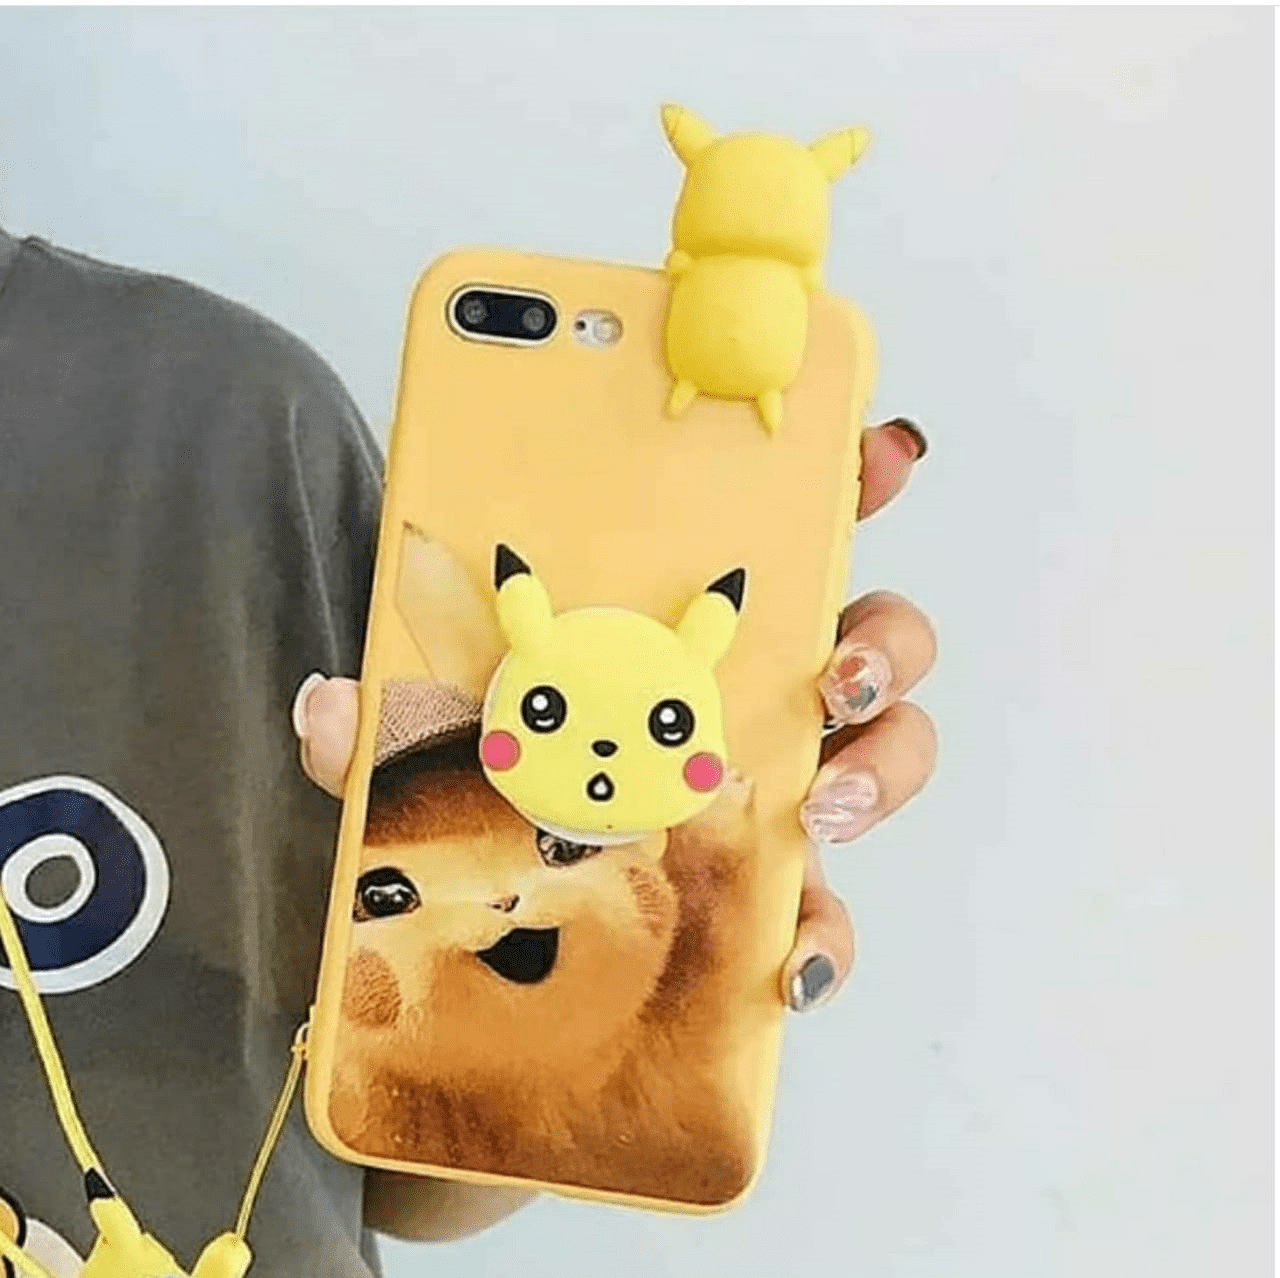 Pikachu case with cute pikachu toy